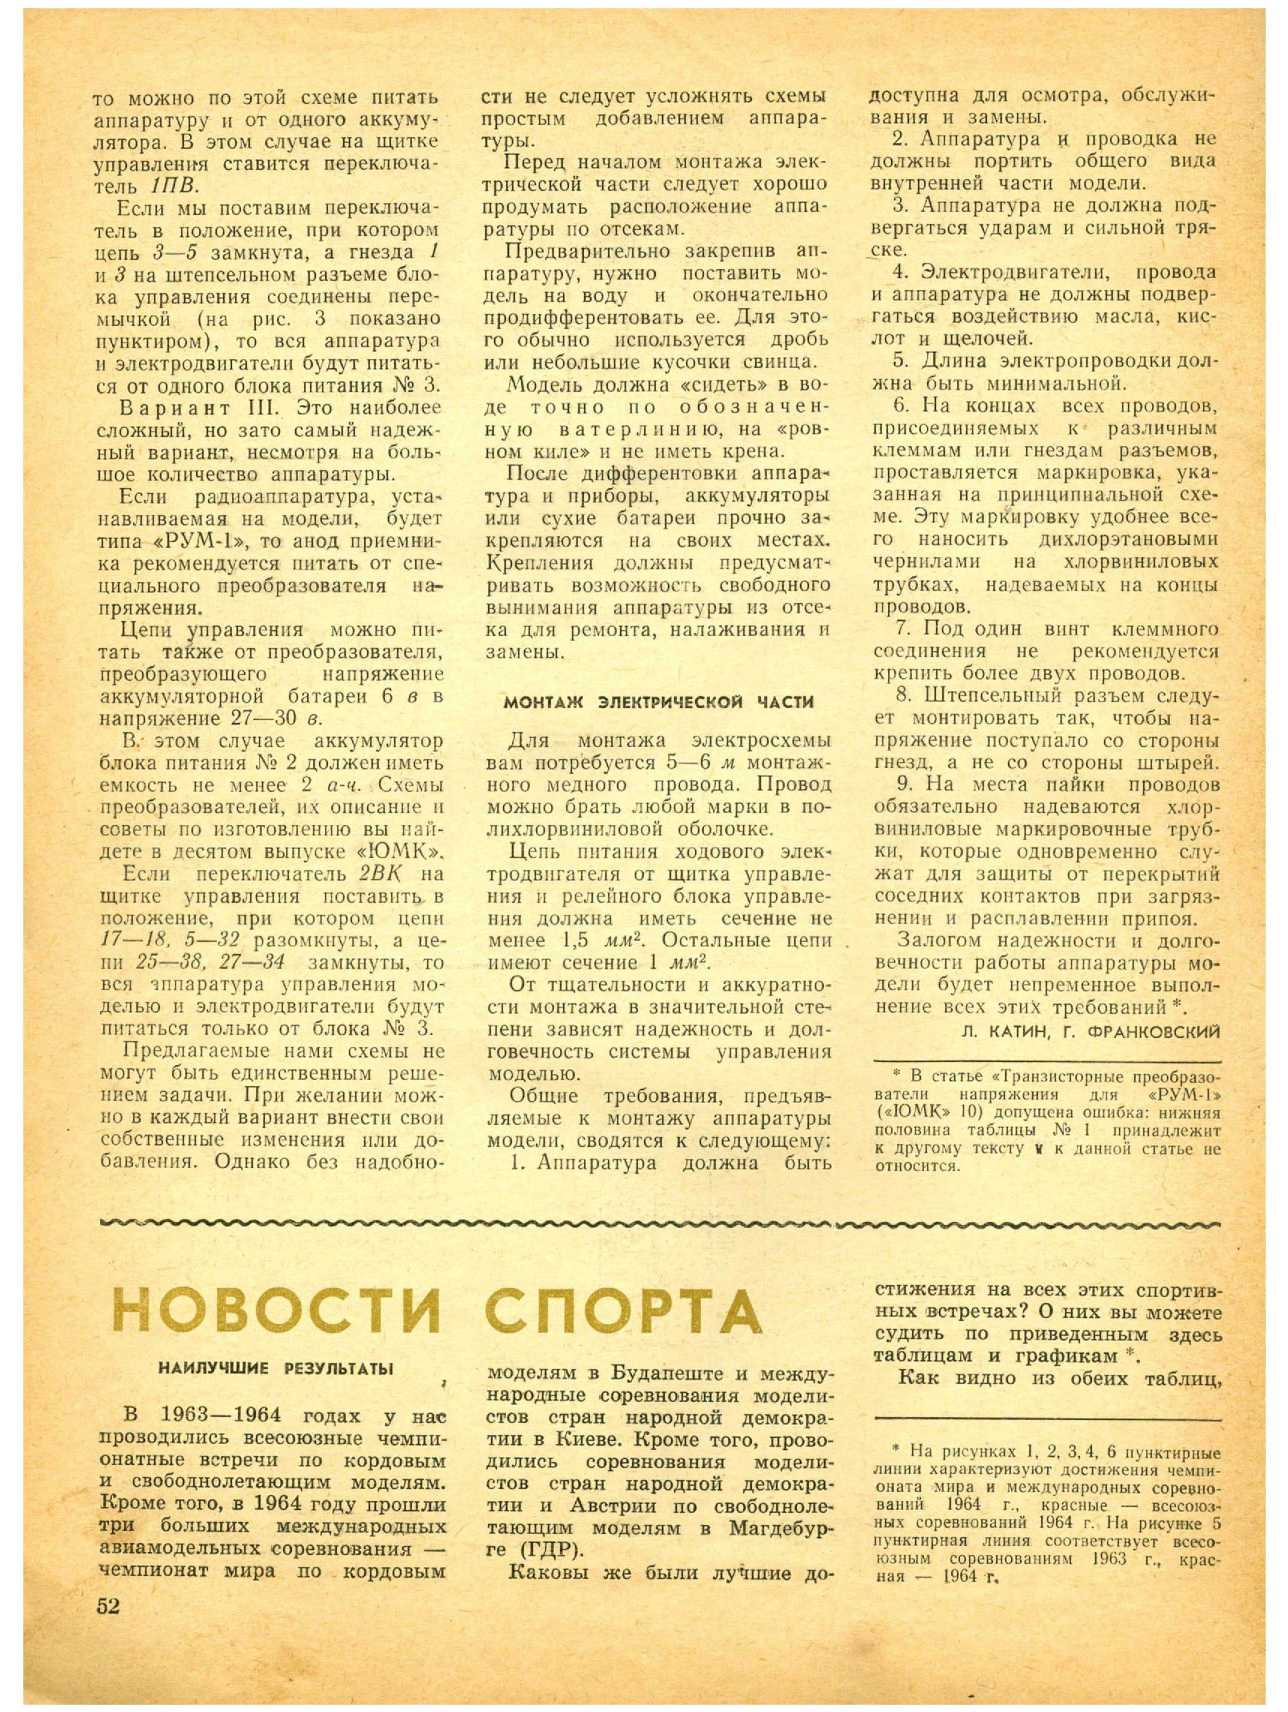 ЮМК 11, 1965, 52 c.